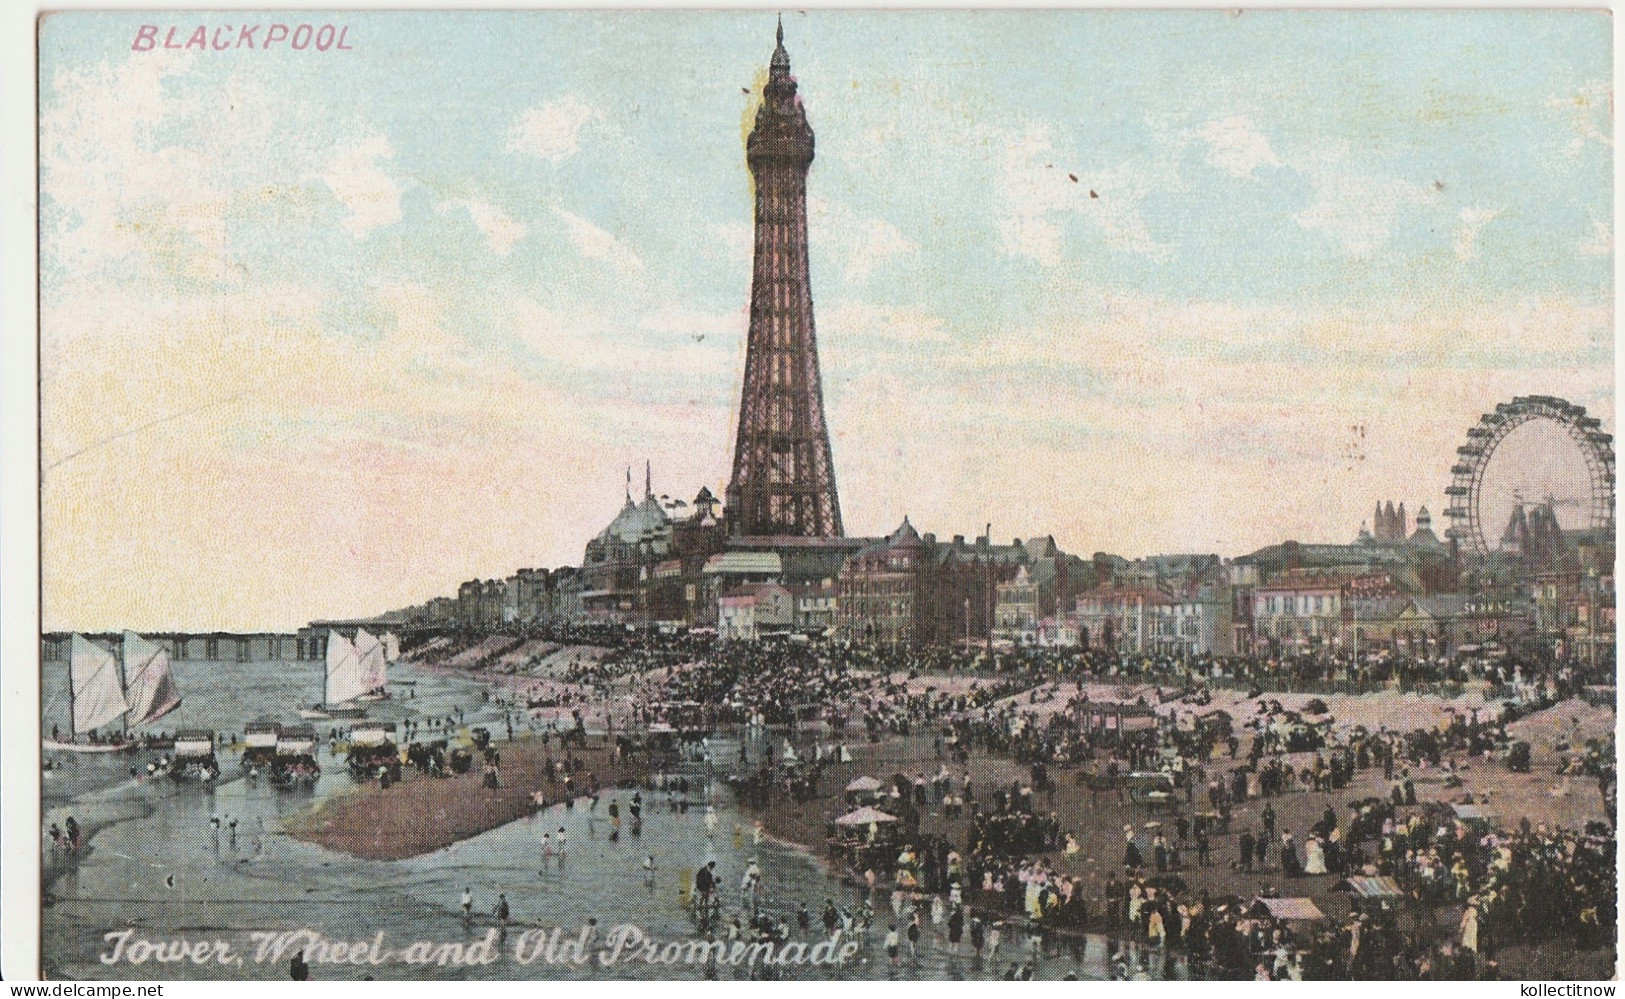 TOWER, WHEEL AND OLD PROMENADE - BLACKPOOL - Blackpool